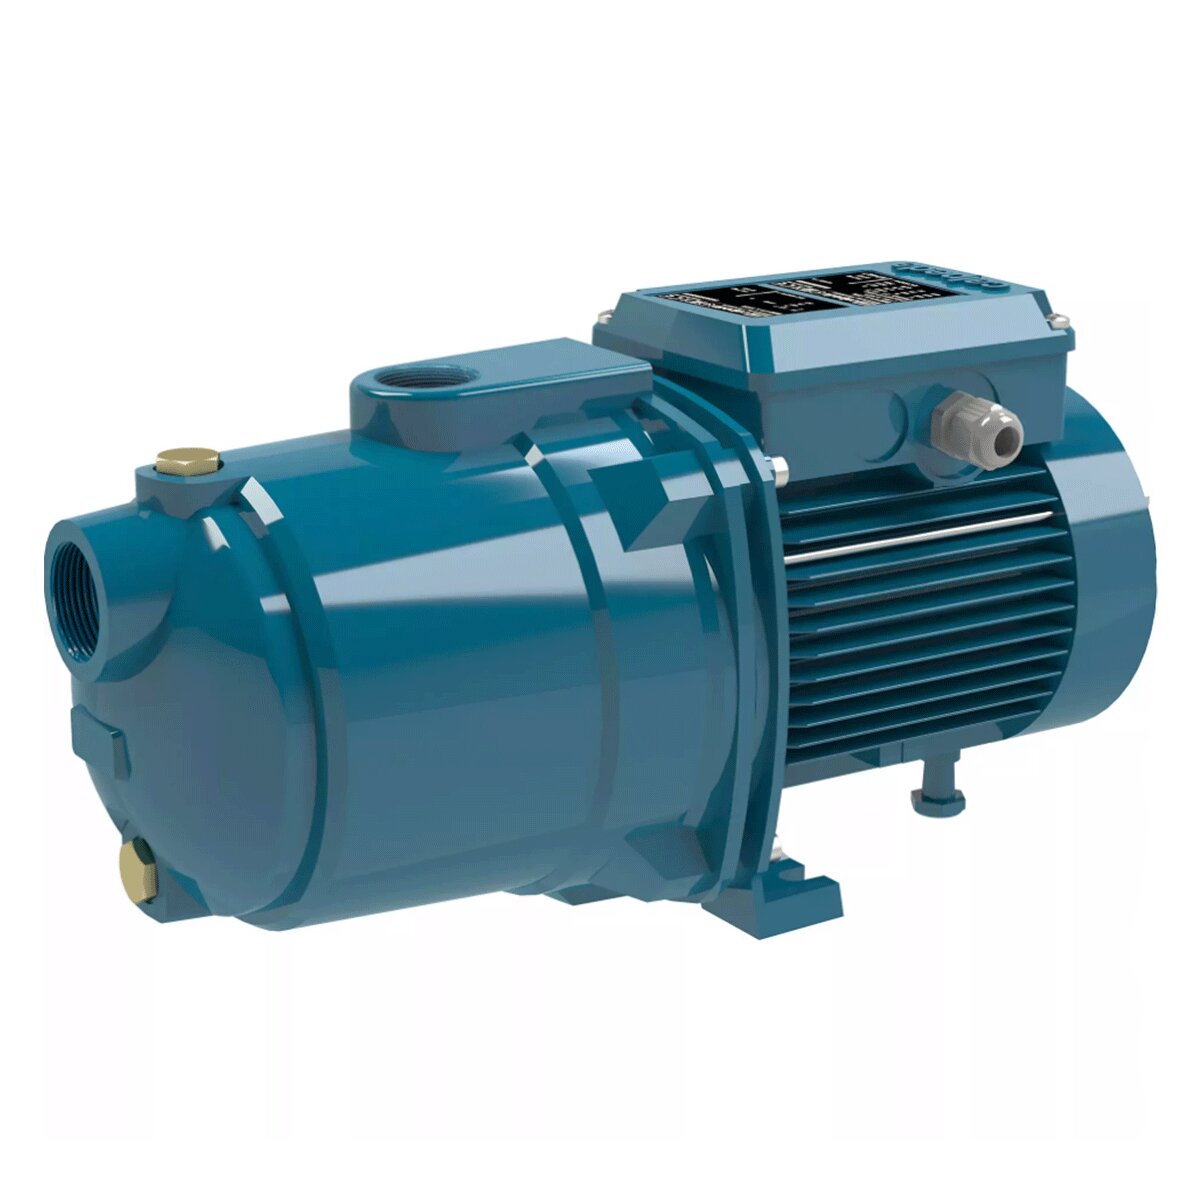 Calpeda MGPM 205 single-phase multi-impeller pump 1 HP/0.75 kW